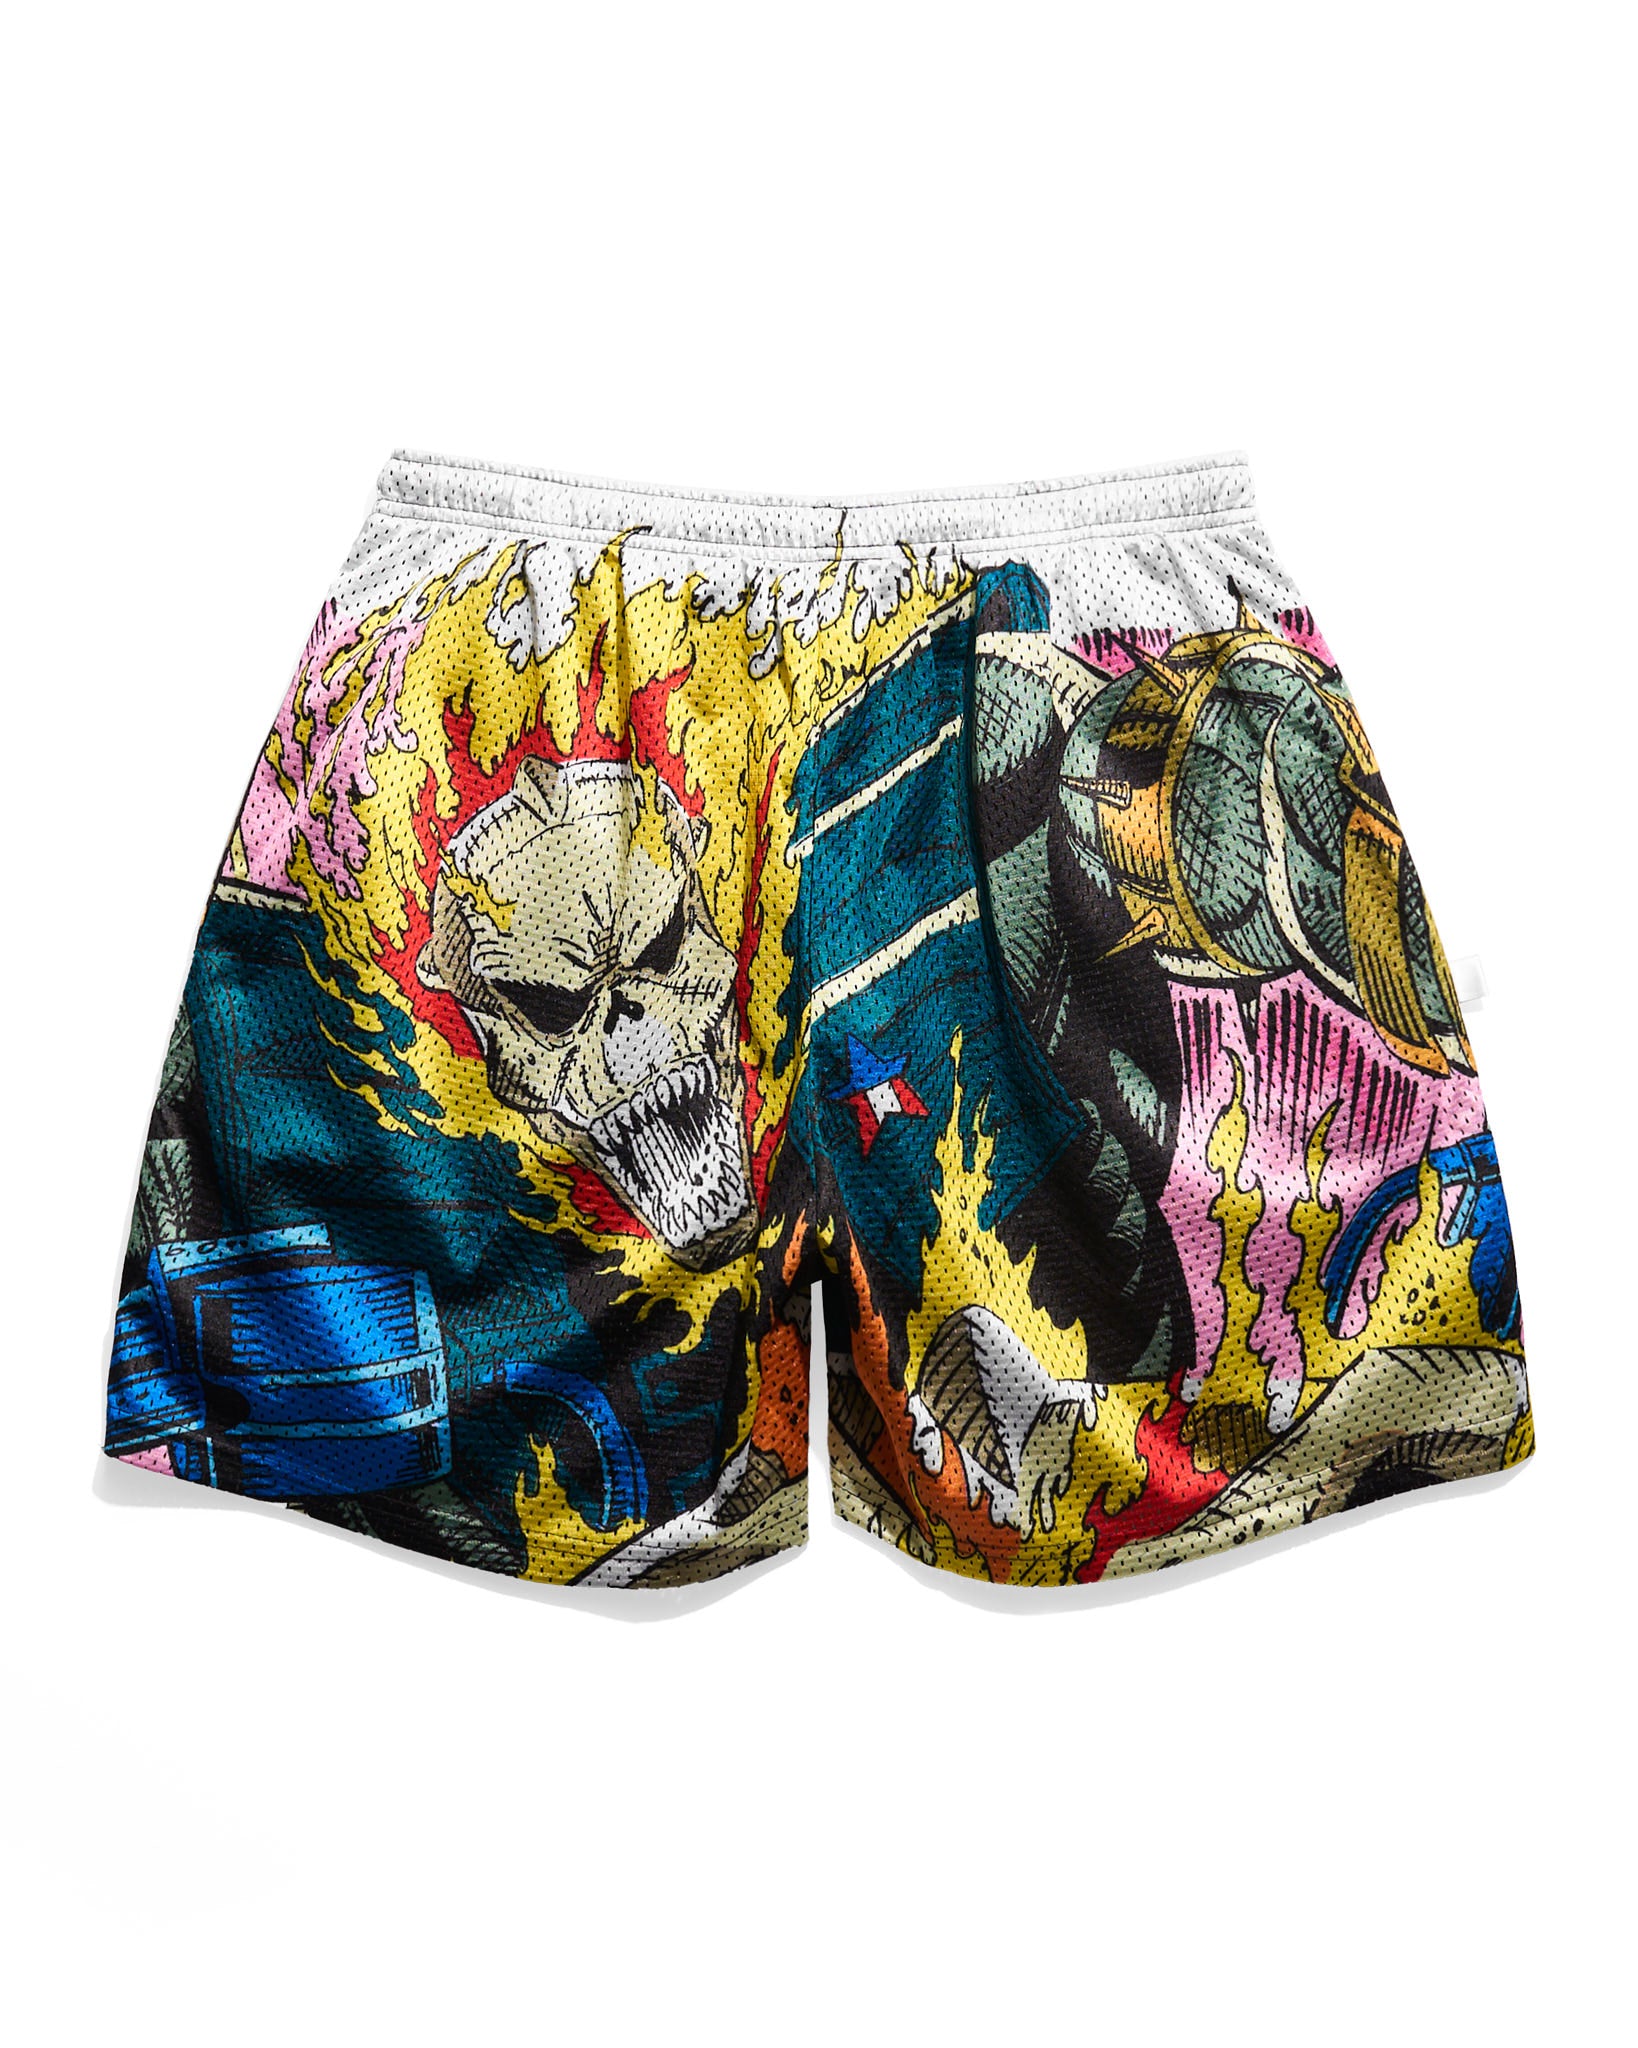 Ghost Rider Retro Shorts